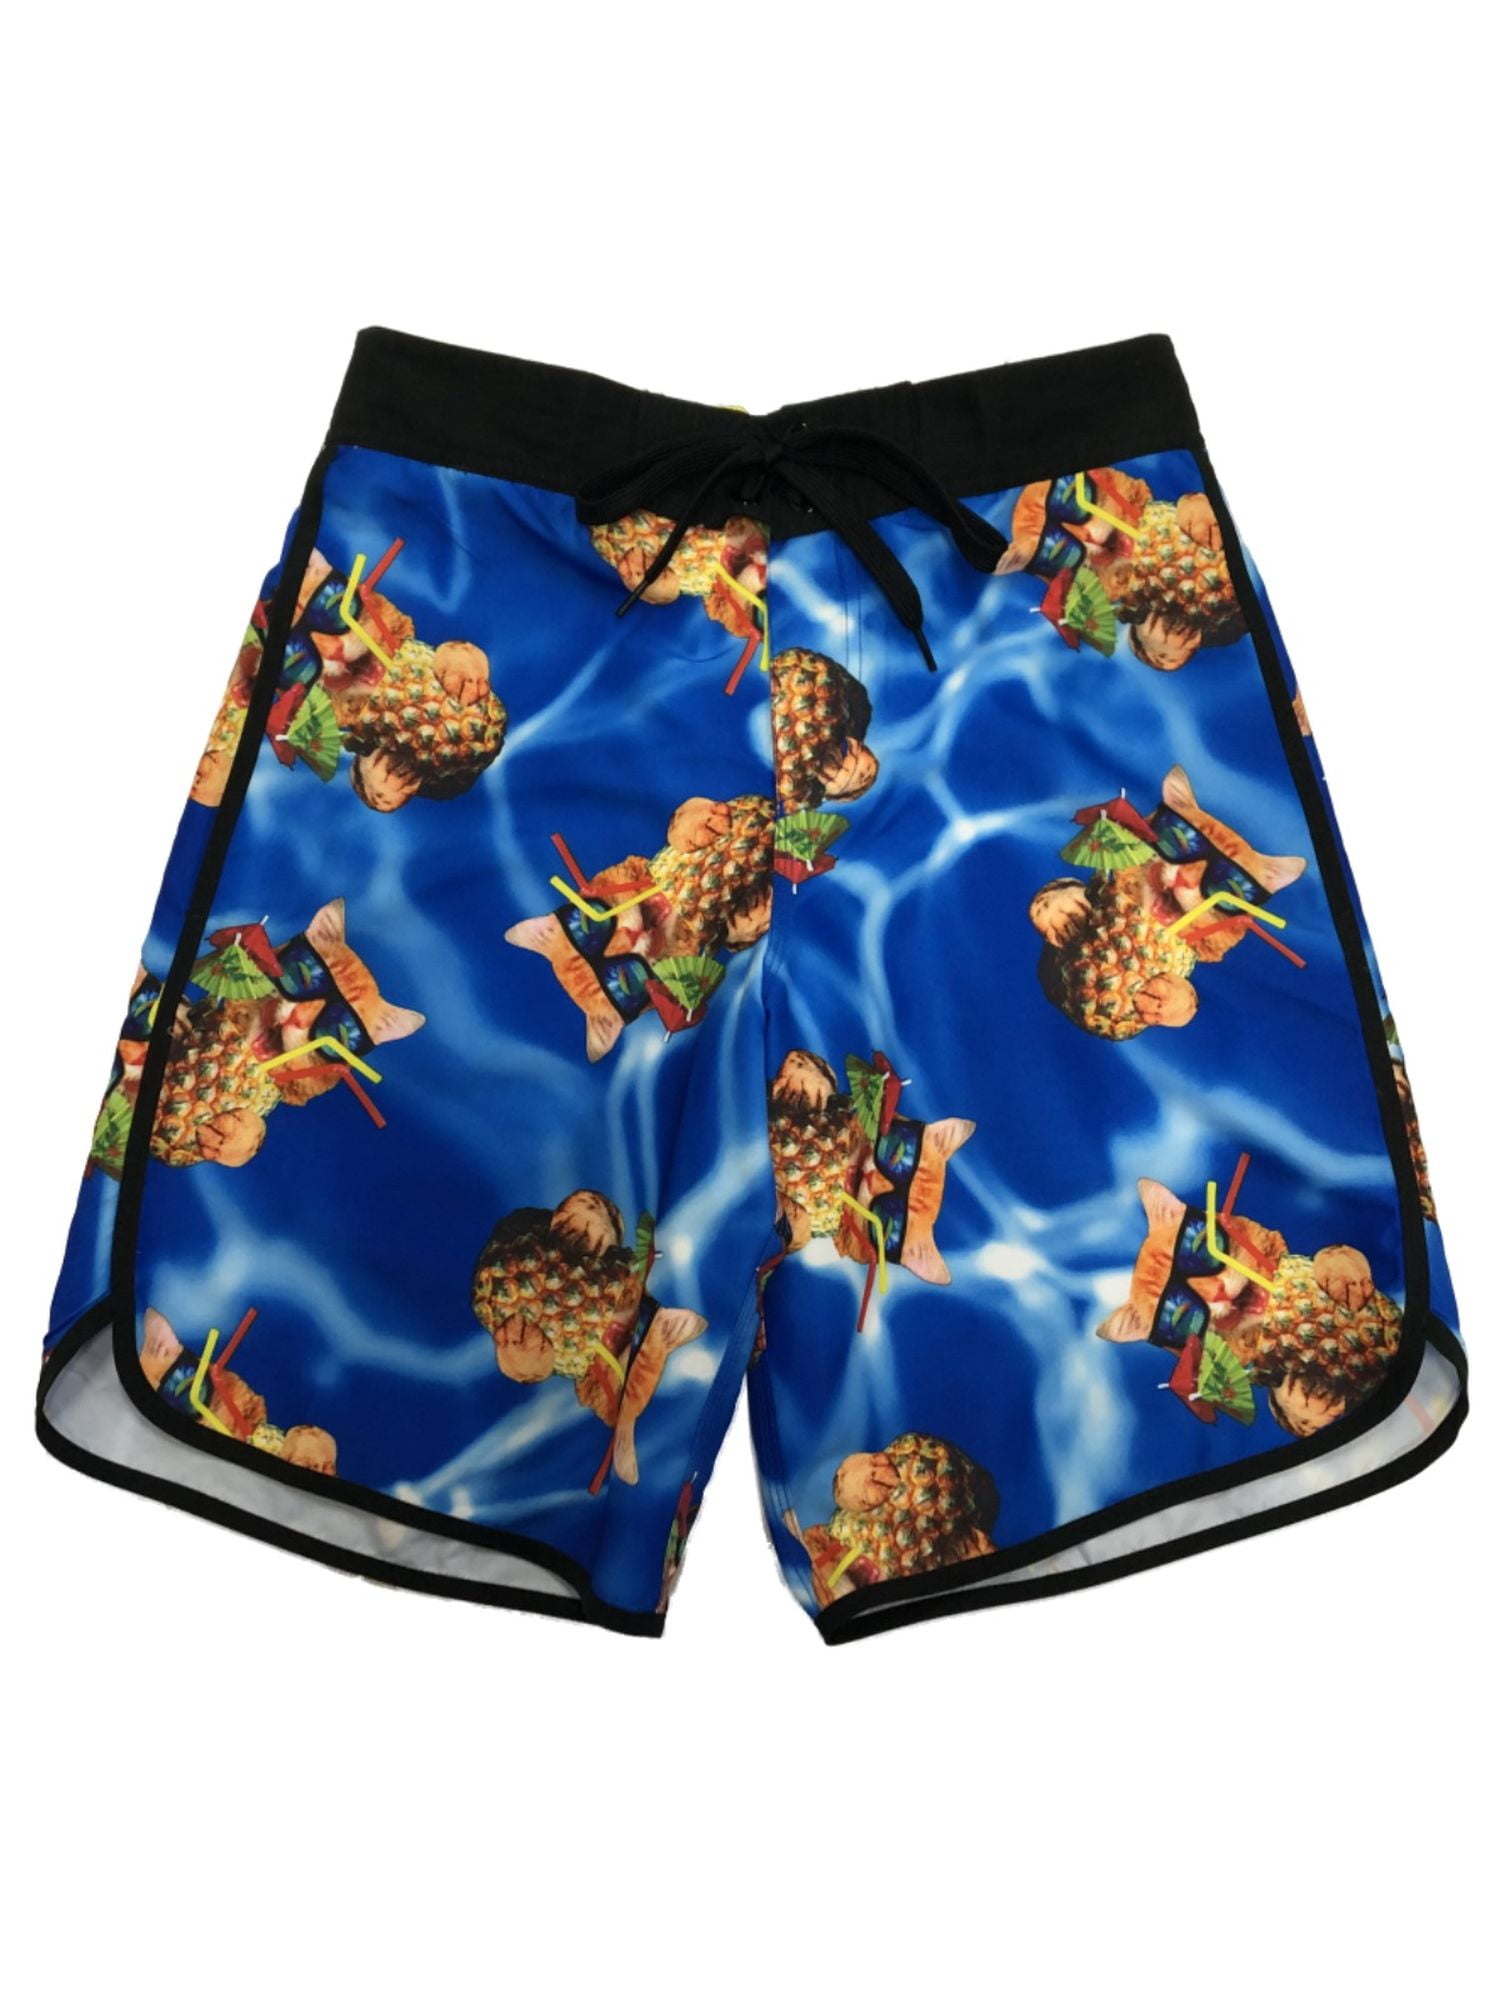 Paw Pet Kitten Mens Swim Trunks Summer Beachwear Board Shorts Quick Dry Print 